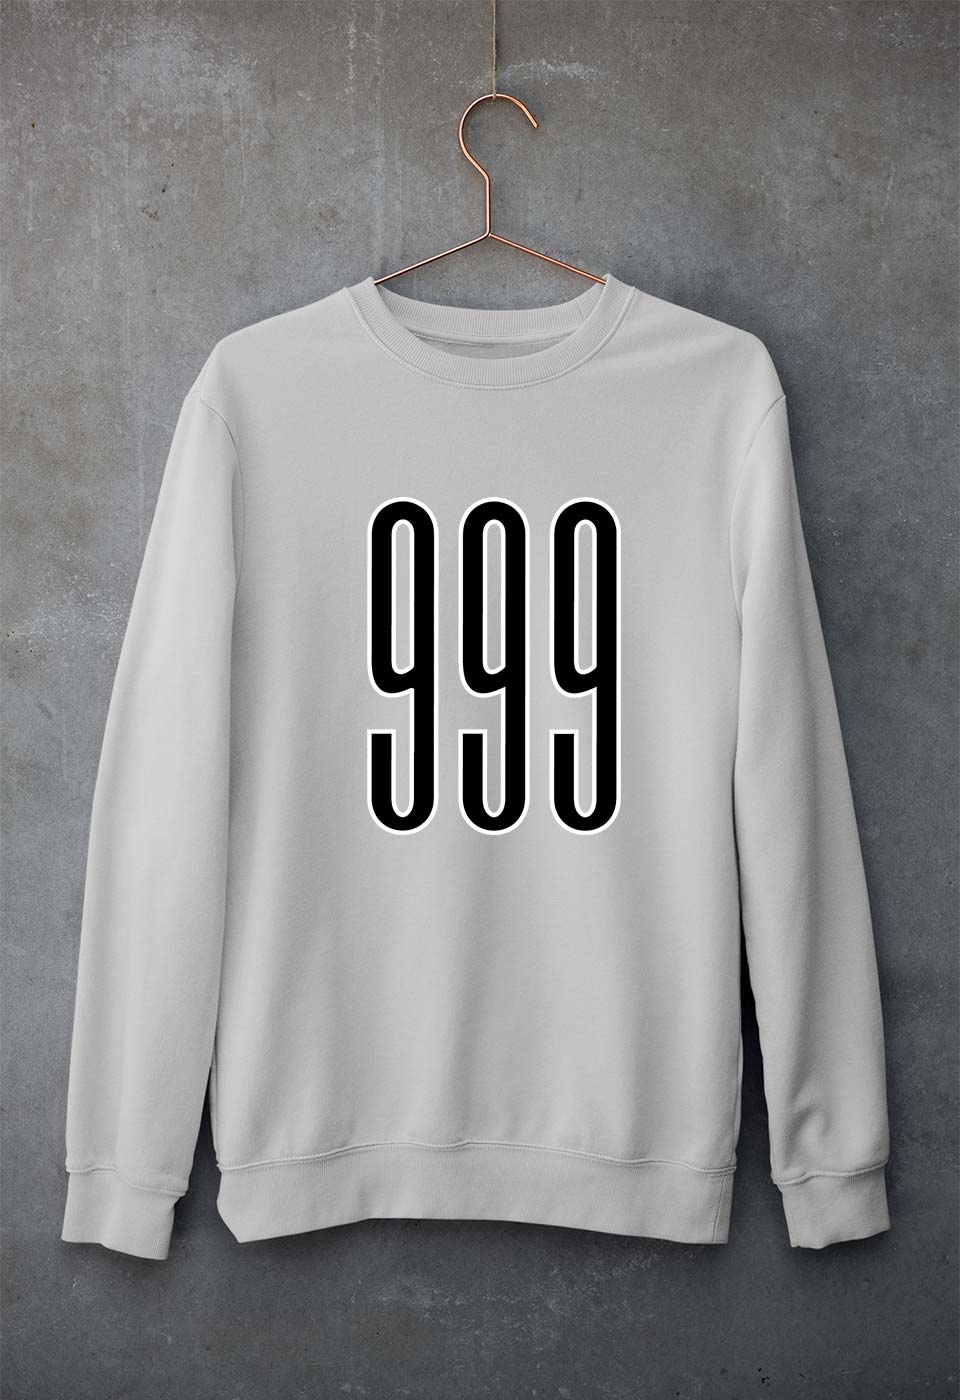 Juice WRLD 999 Unisex Sweatshirt for Men/Women-S(40 Inches)-Grey Melange-Ektarfa.online